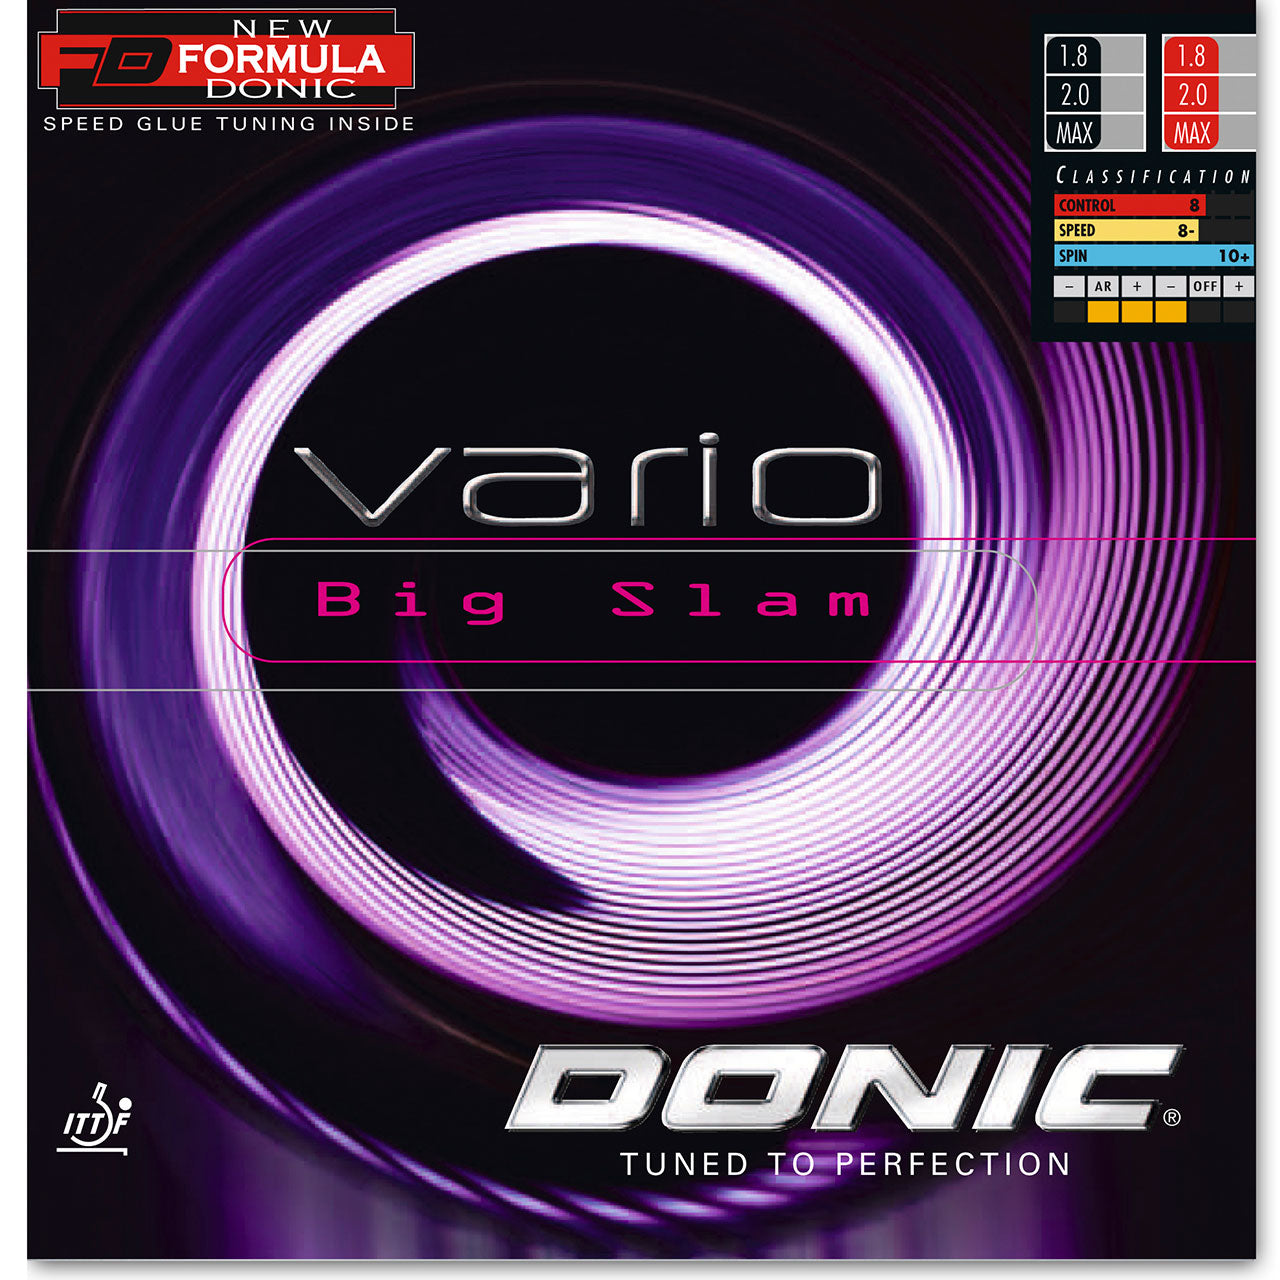 Donic Vario Big Slam - Killypong